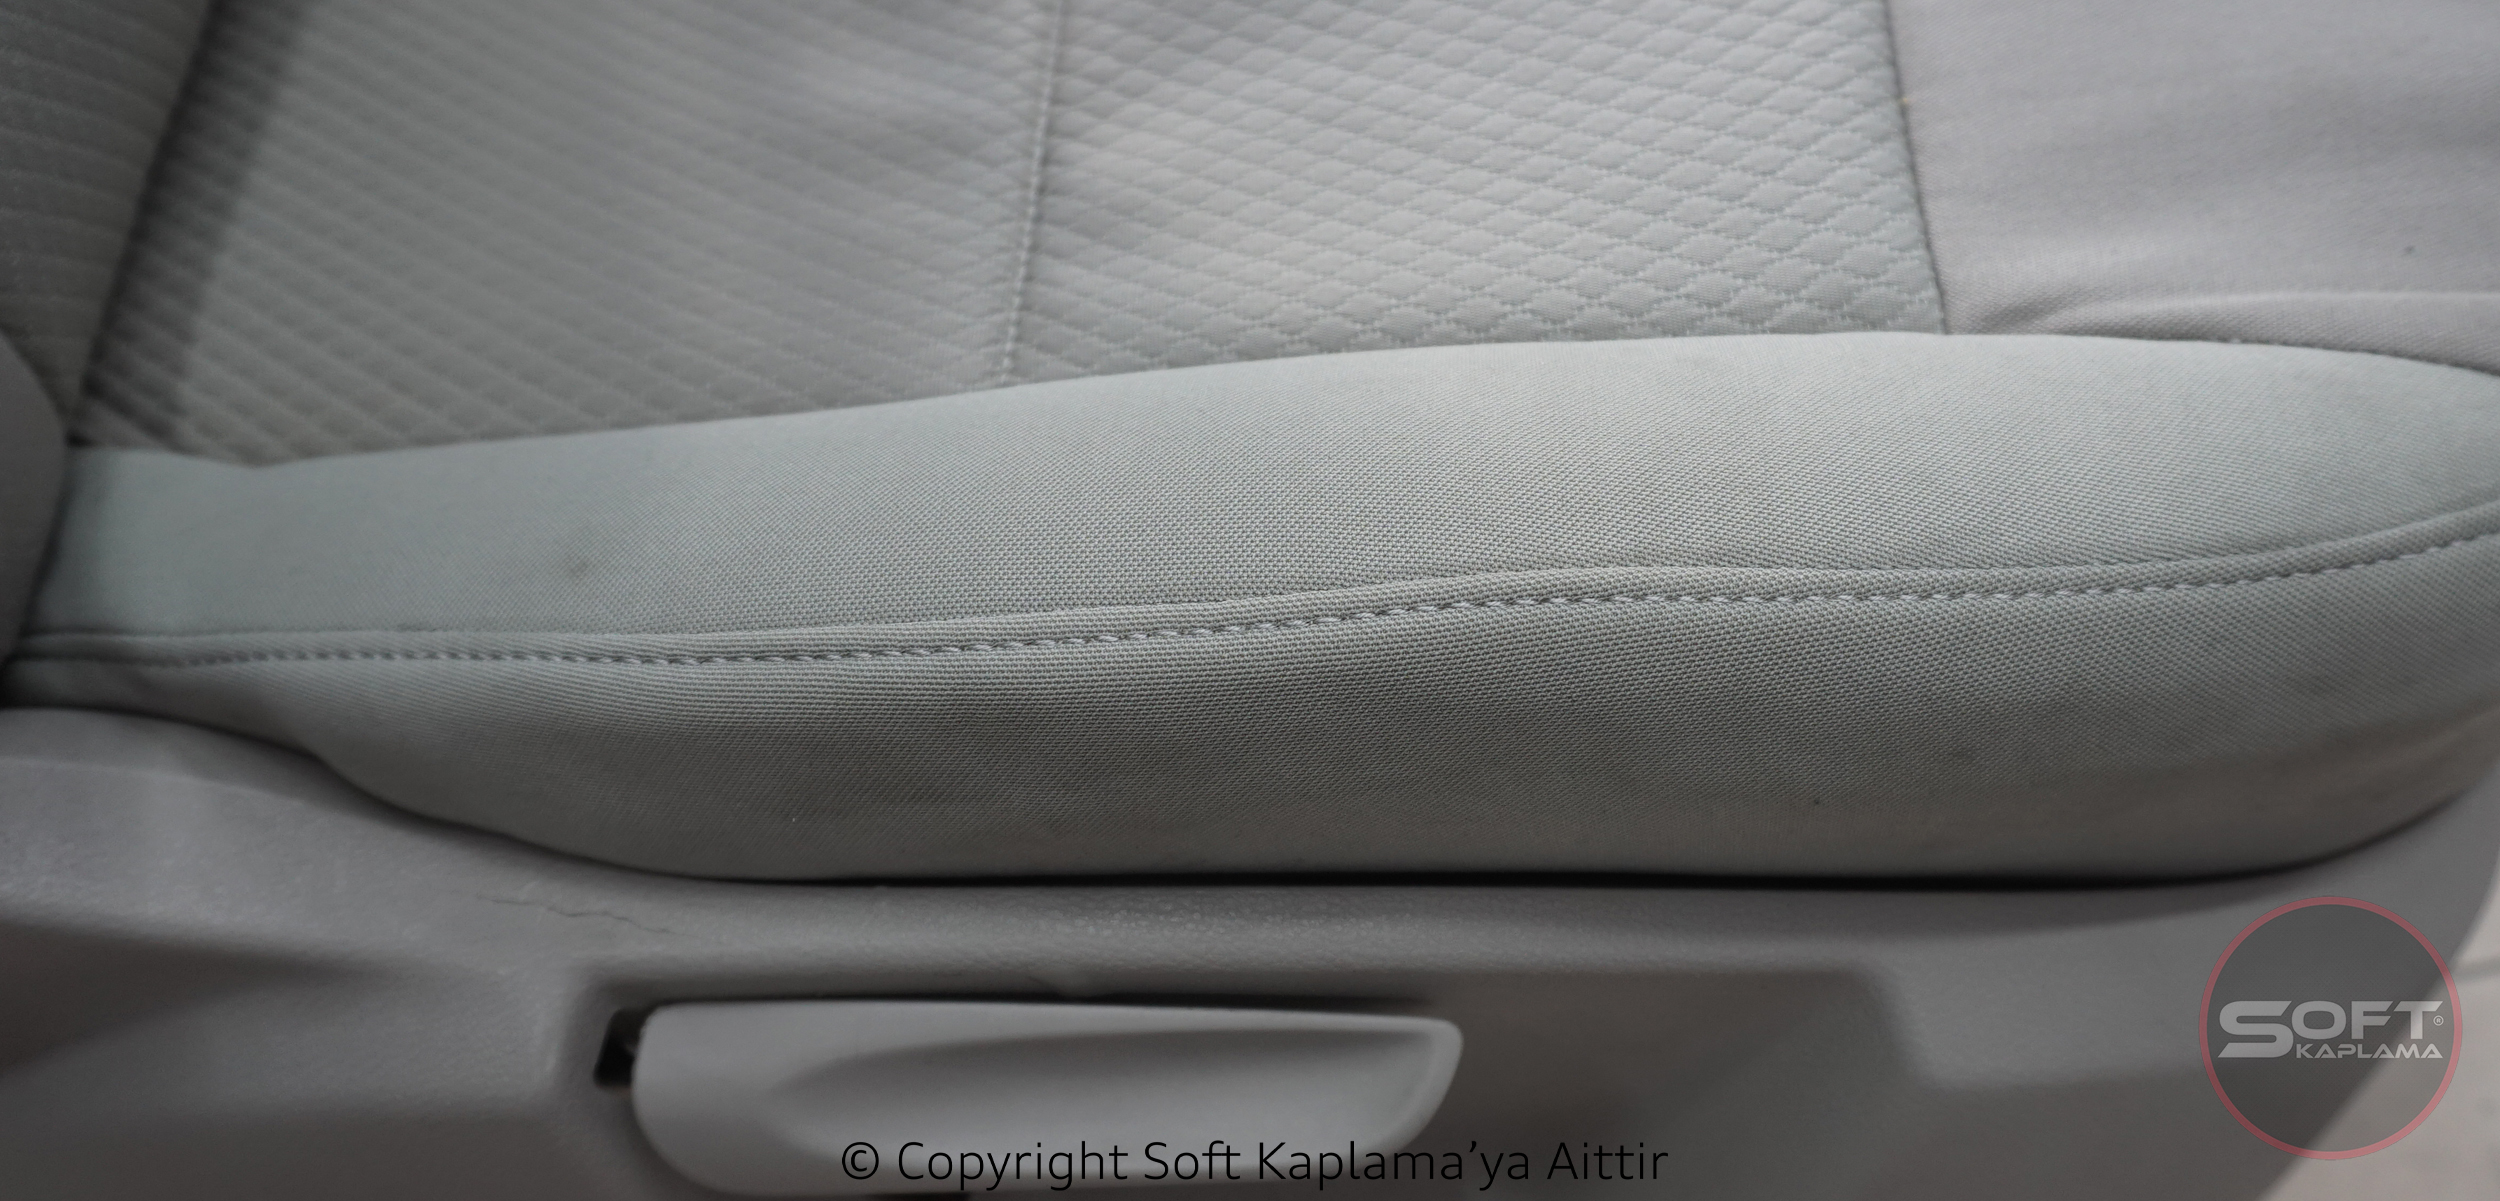 Audi-kumas-koltuk-yirtik-deformasyon-parca-degisimi-soft-kaplama-restorasyon-sonra.jpg